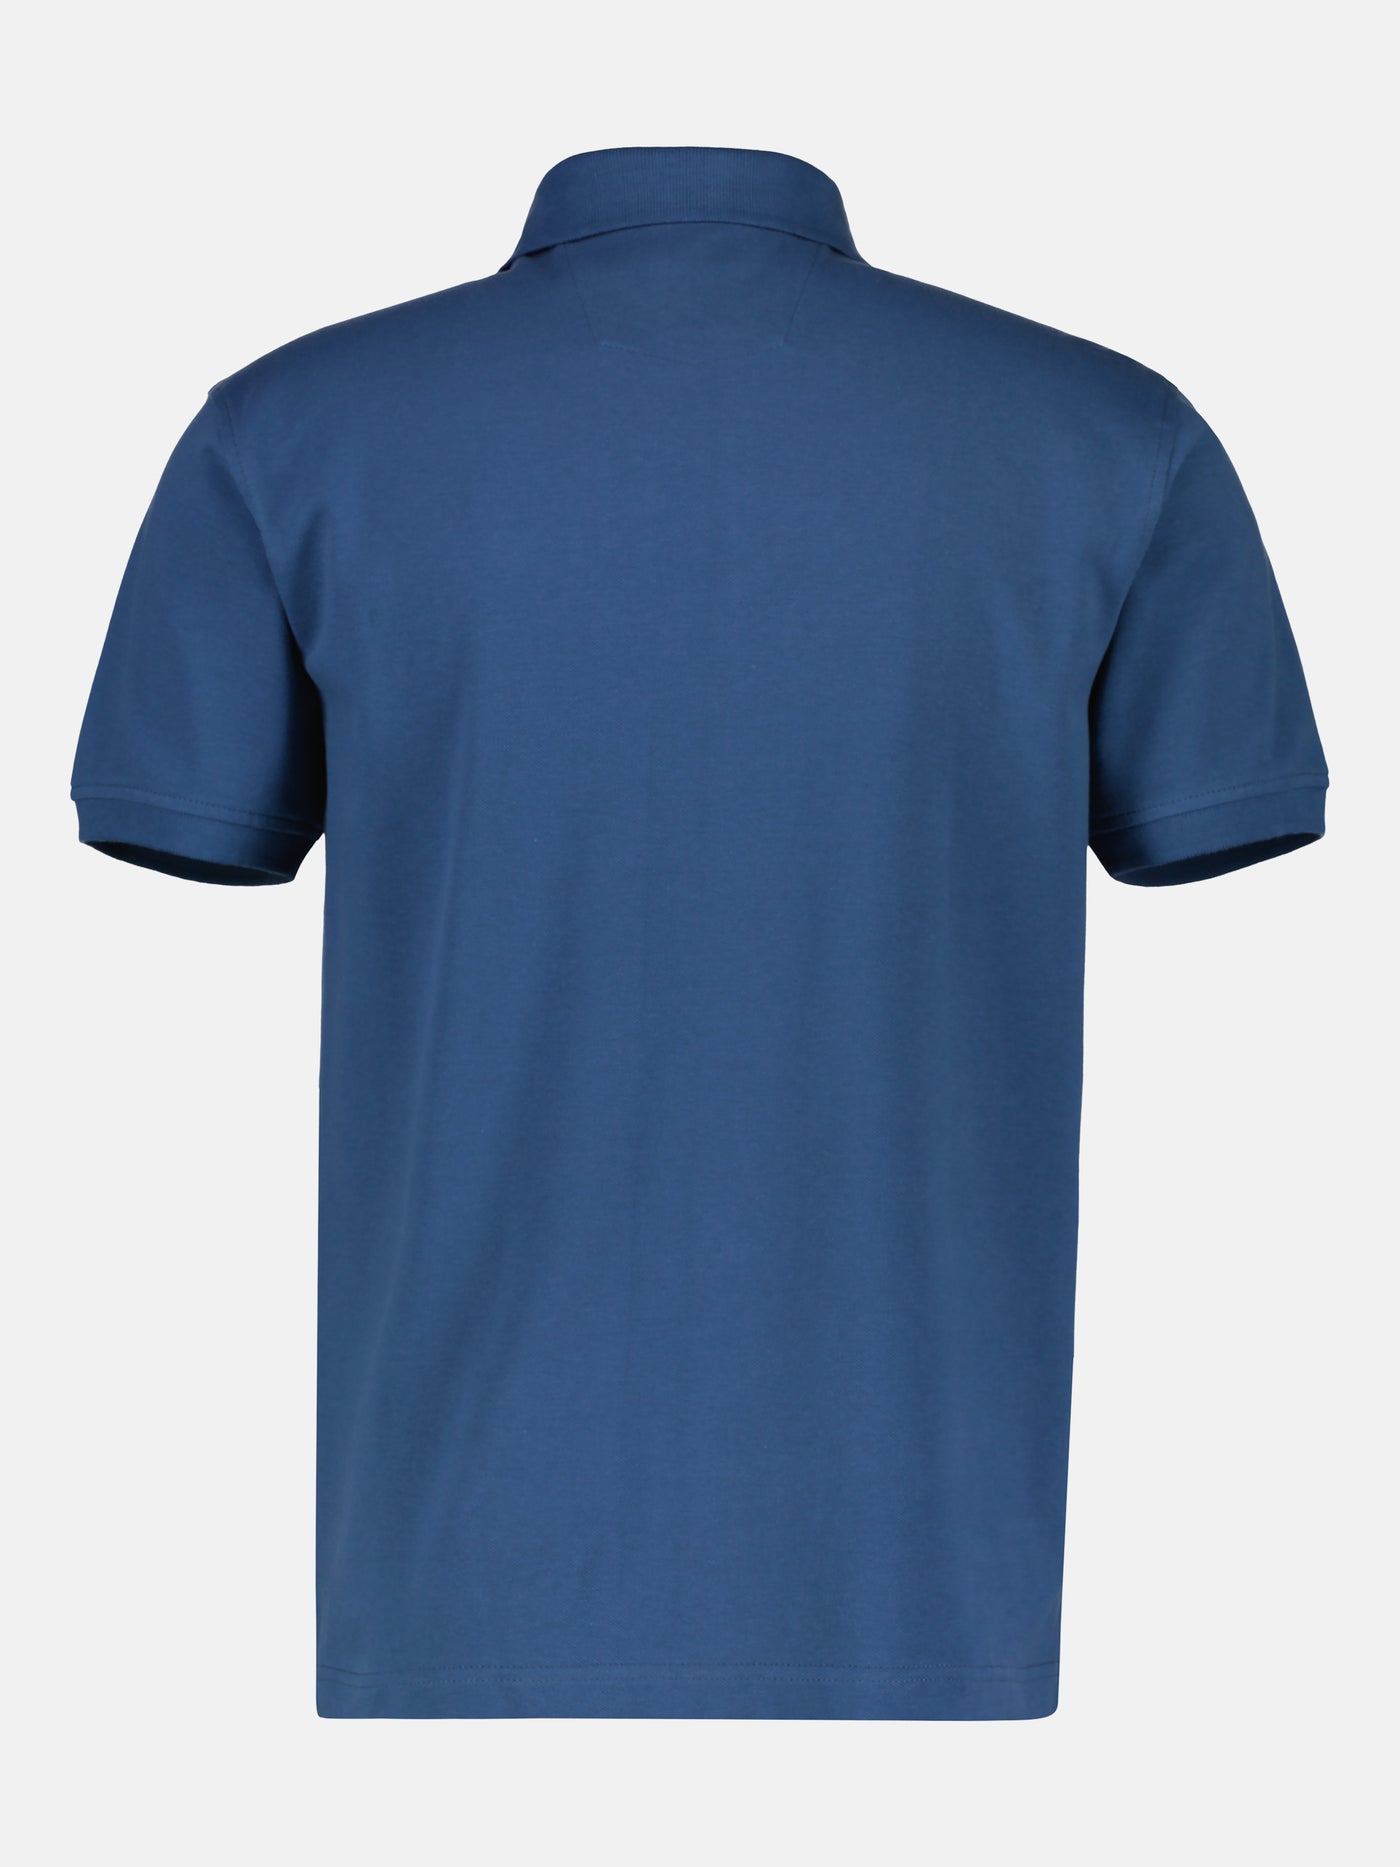 Piqué-Poloshirt in hochwertiger Baumwollqualität, BCI-zertifiziert